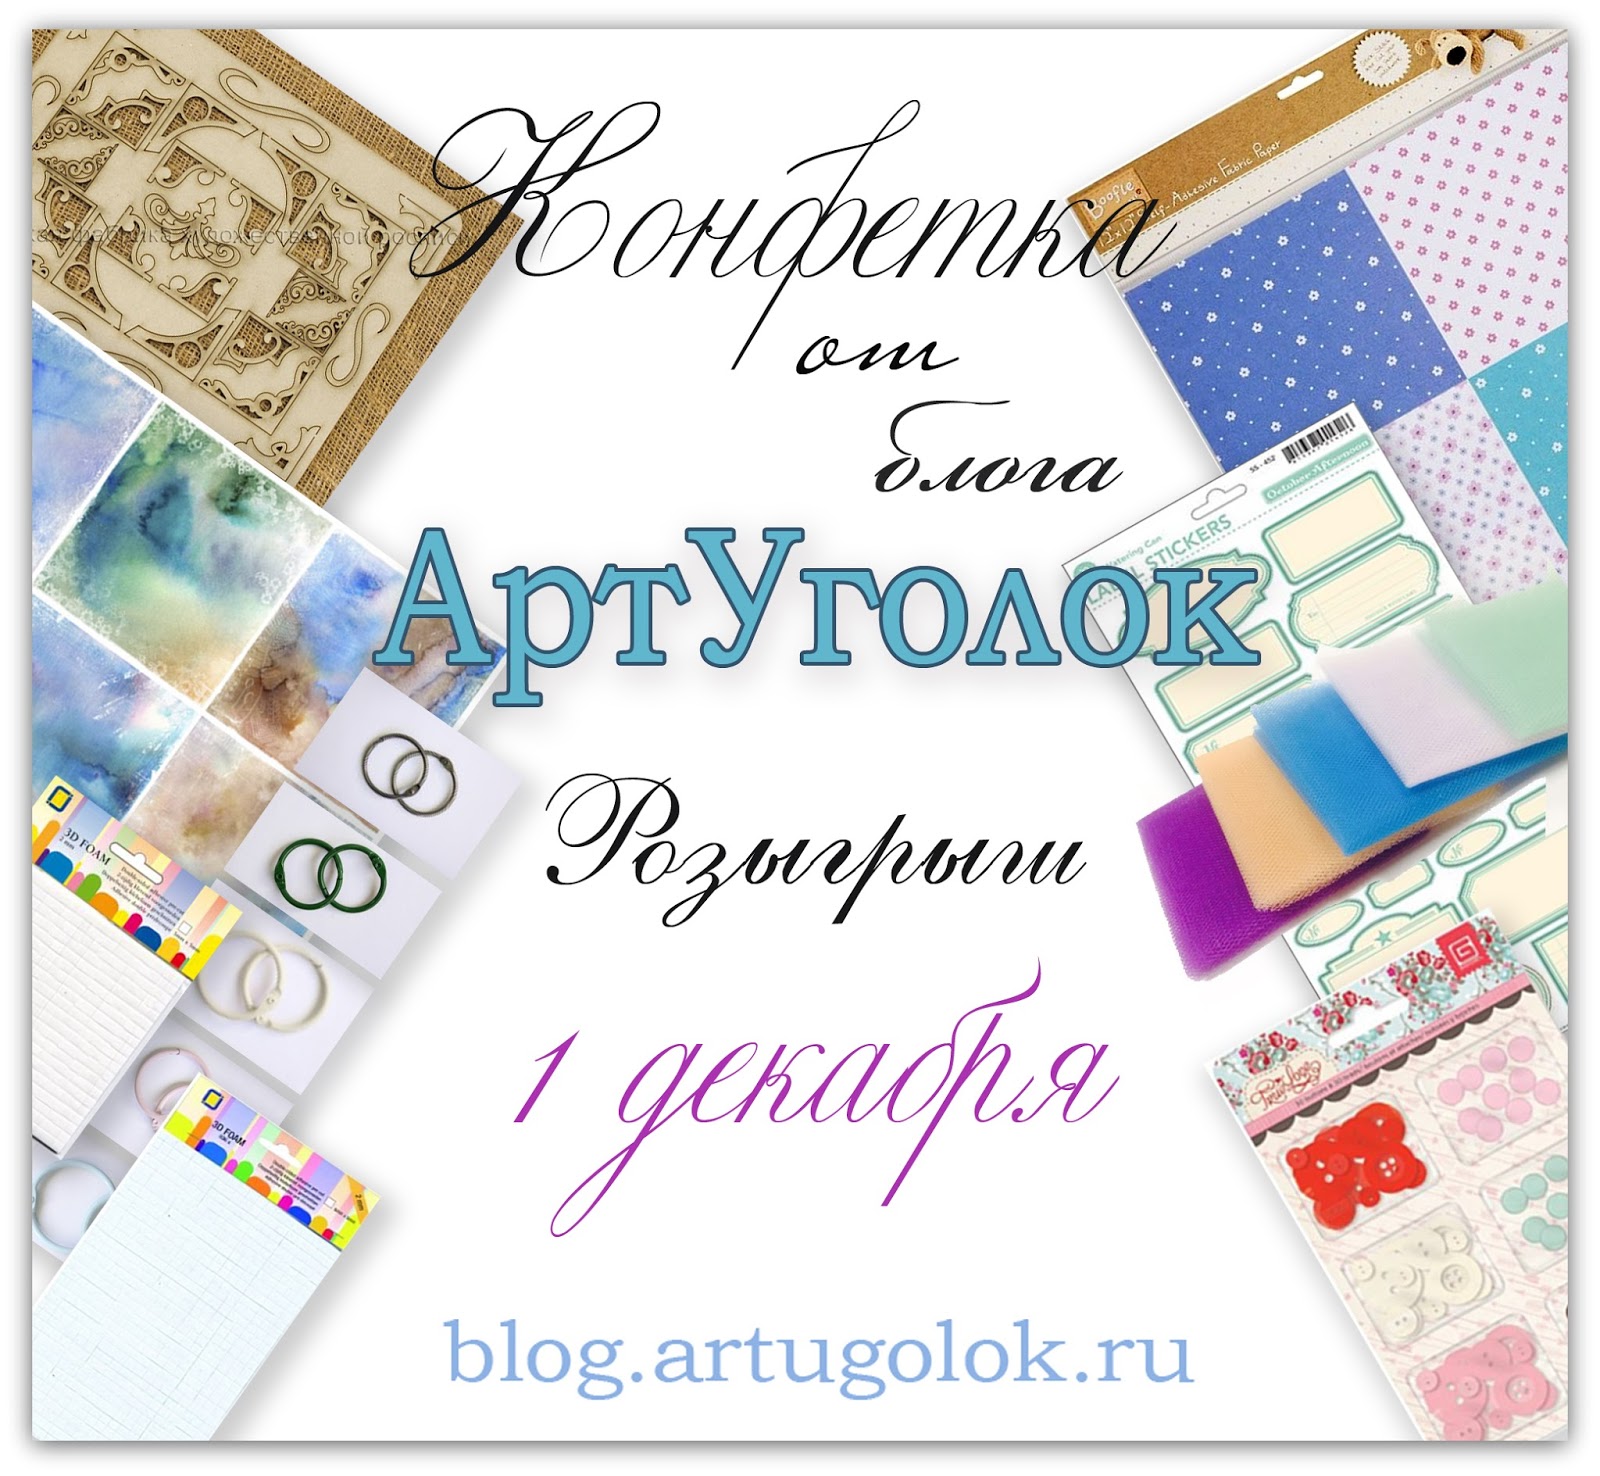 http://blog.artugolok.ru/2014/11/blog-post.html